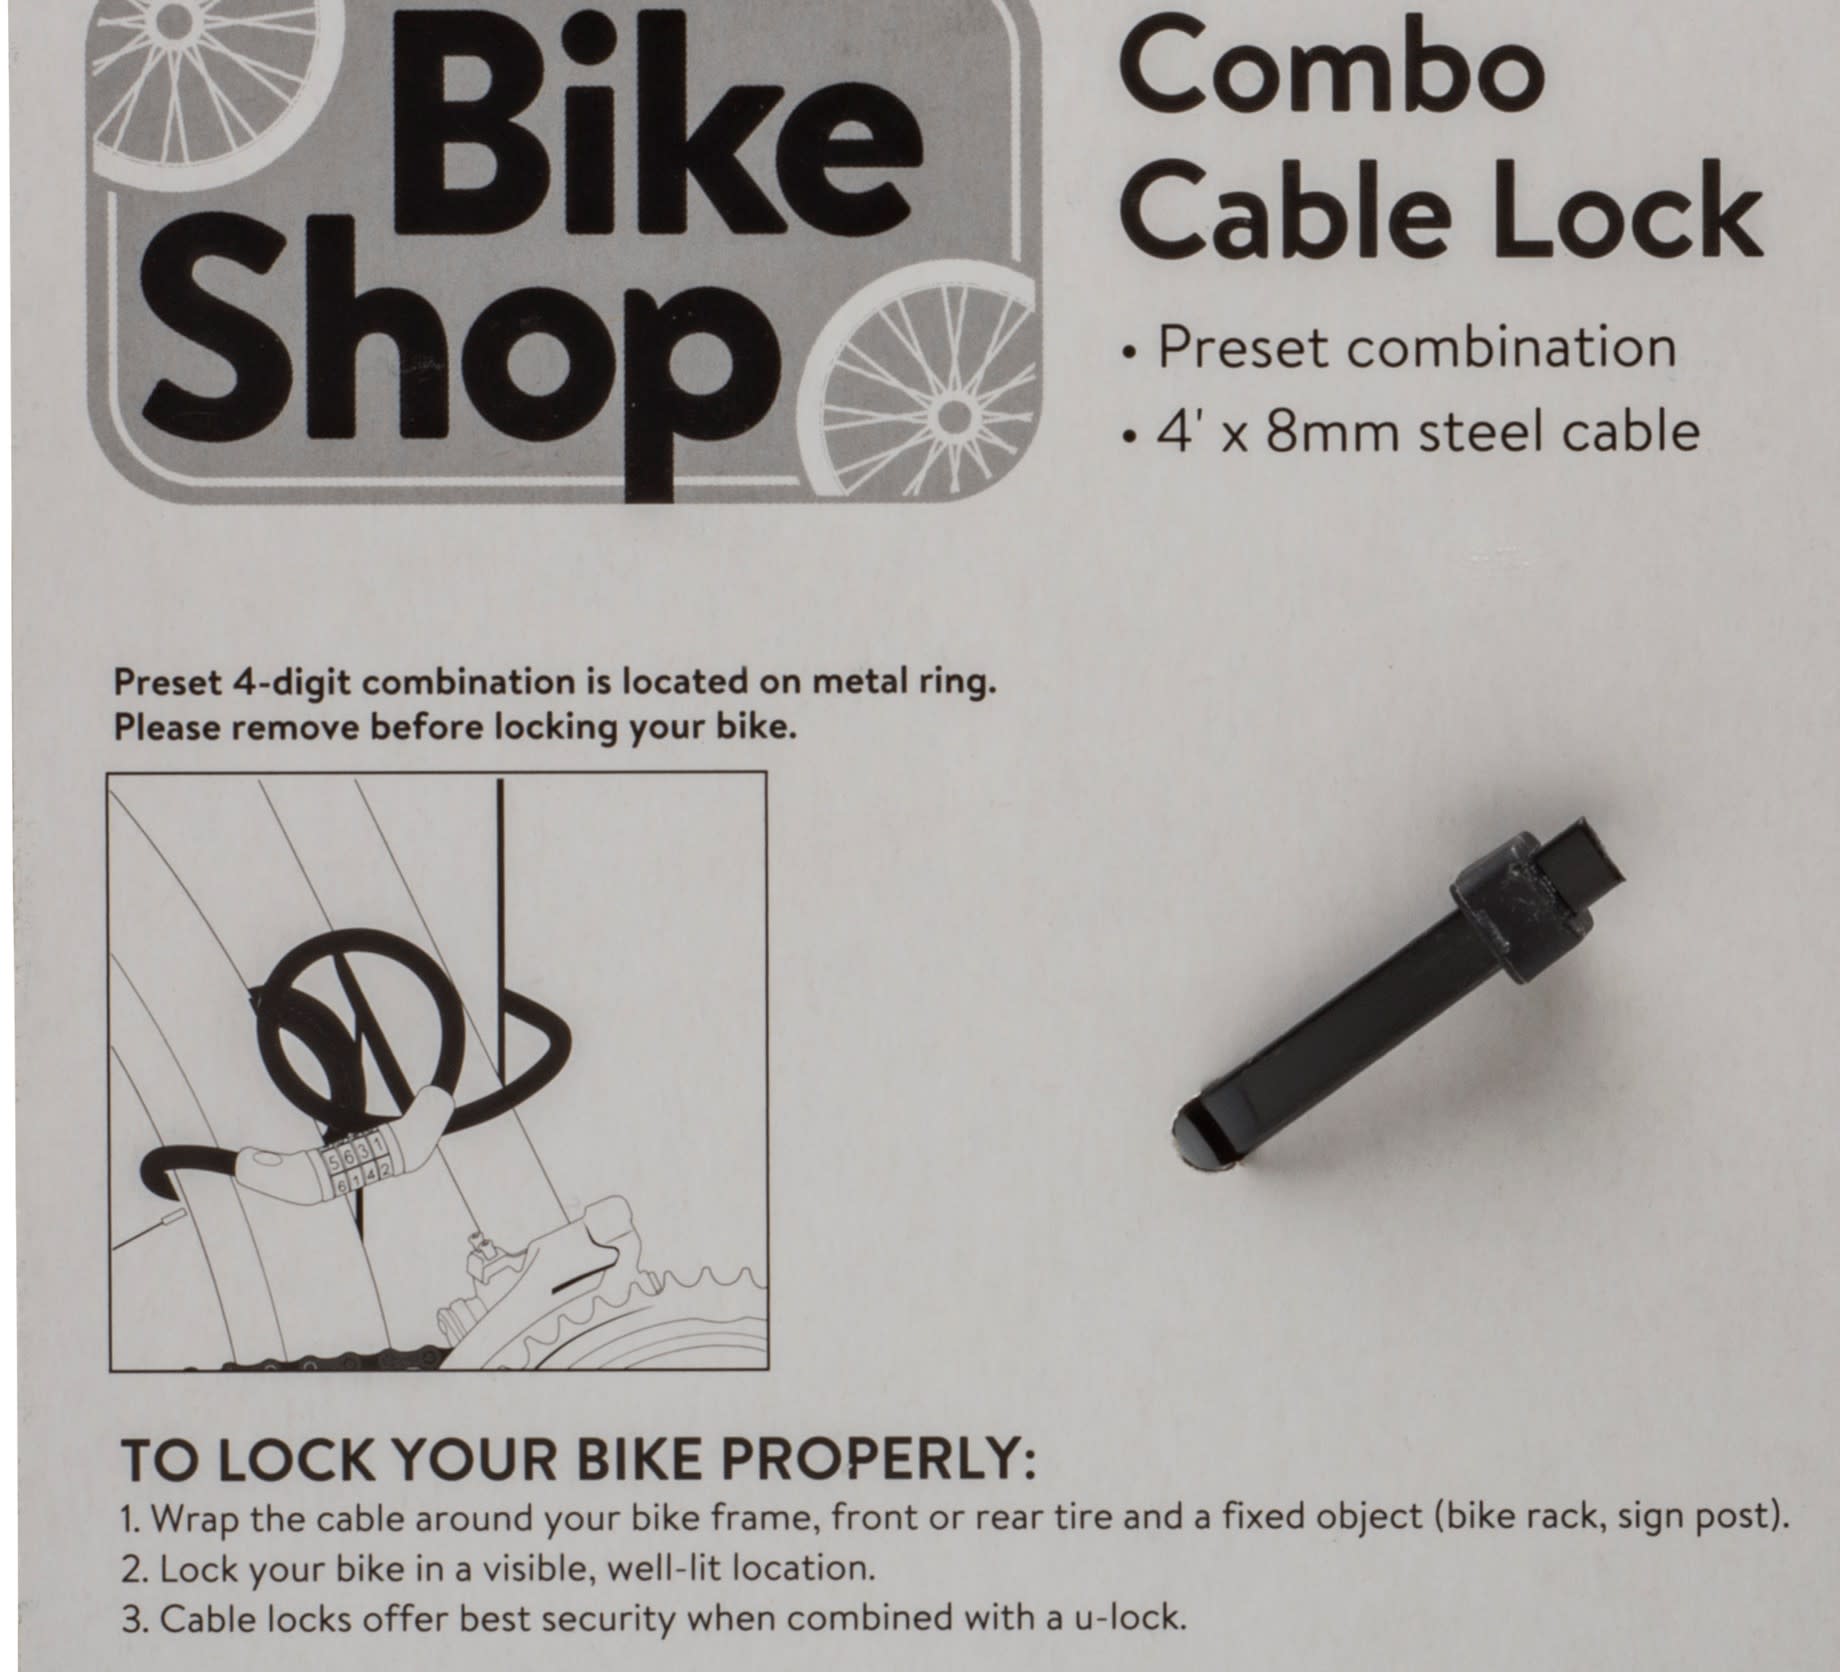 Bike Shop 4ft x 8mm Combo Cable Bike Lock - image 3 of 5